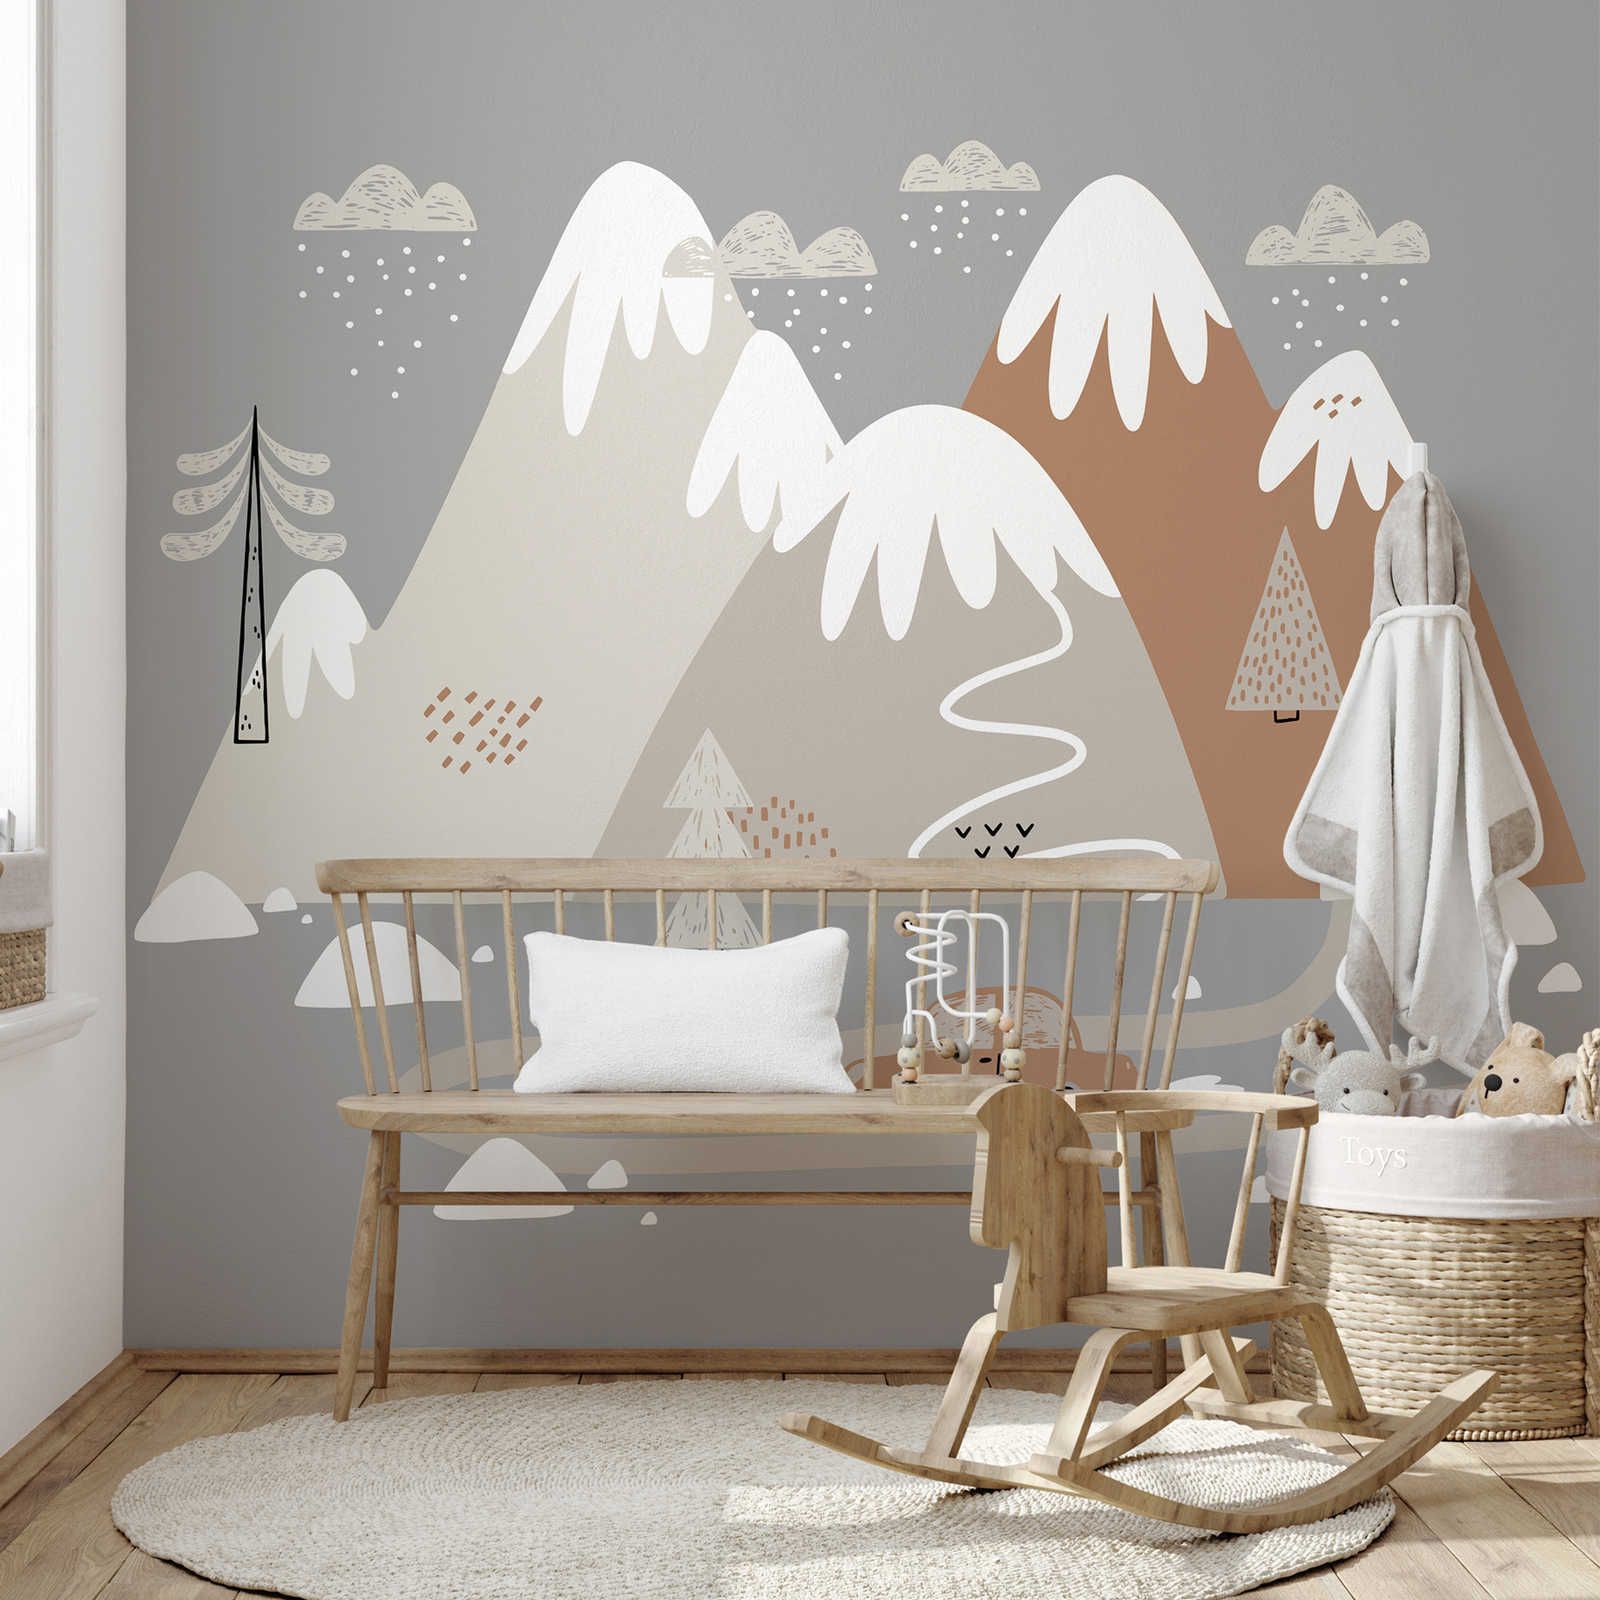 Digital behang besneeuwde heuvels met klein huisje - Glad & parelmoervlies
